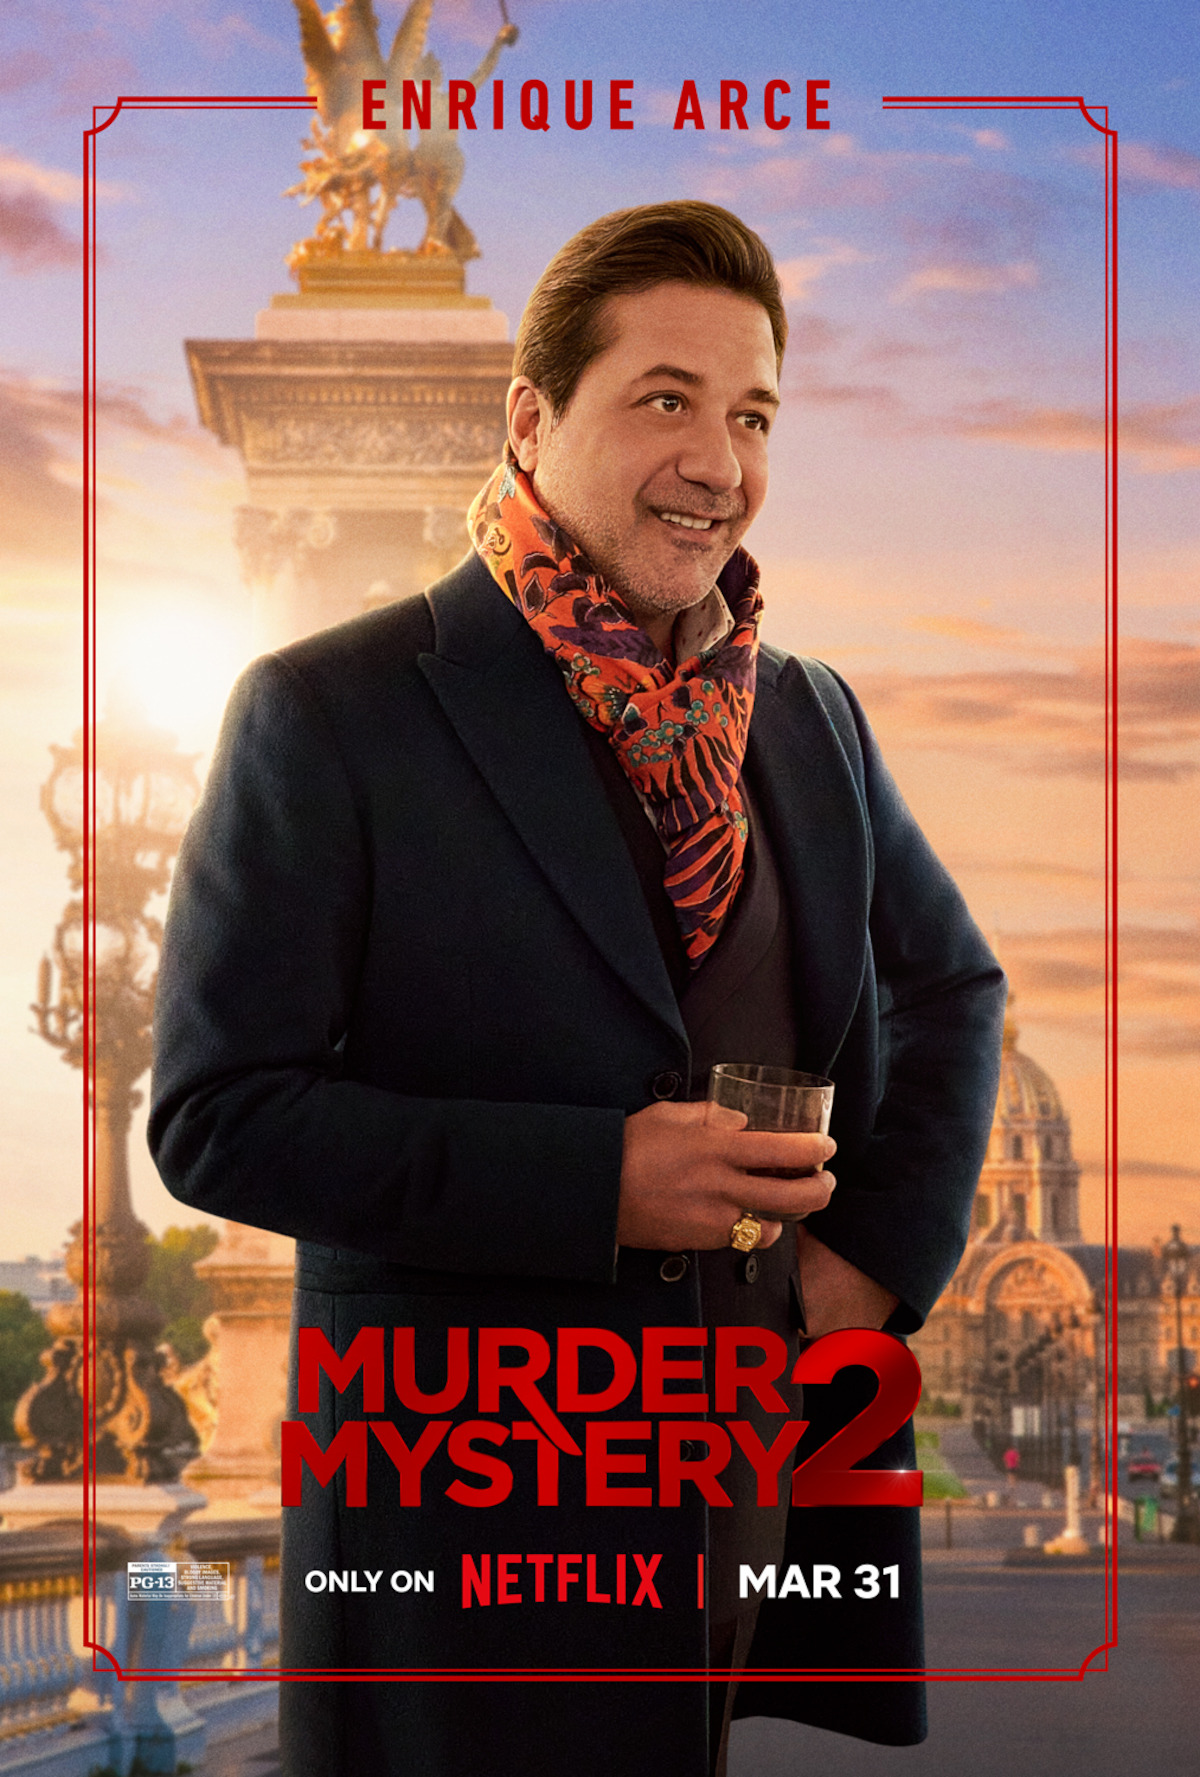 Murder Mystery 2 Cast Guide: Jennifer Aniston, Adam Sandler